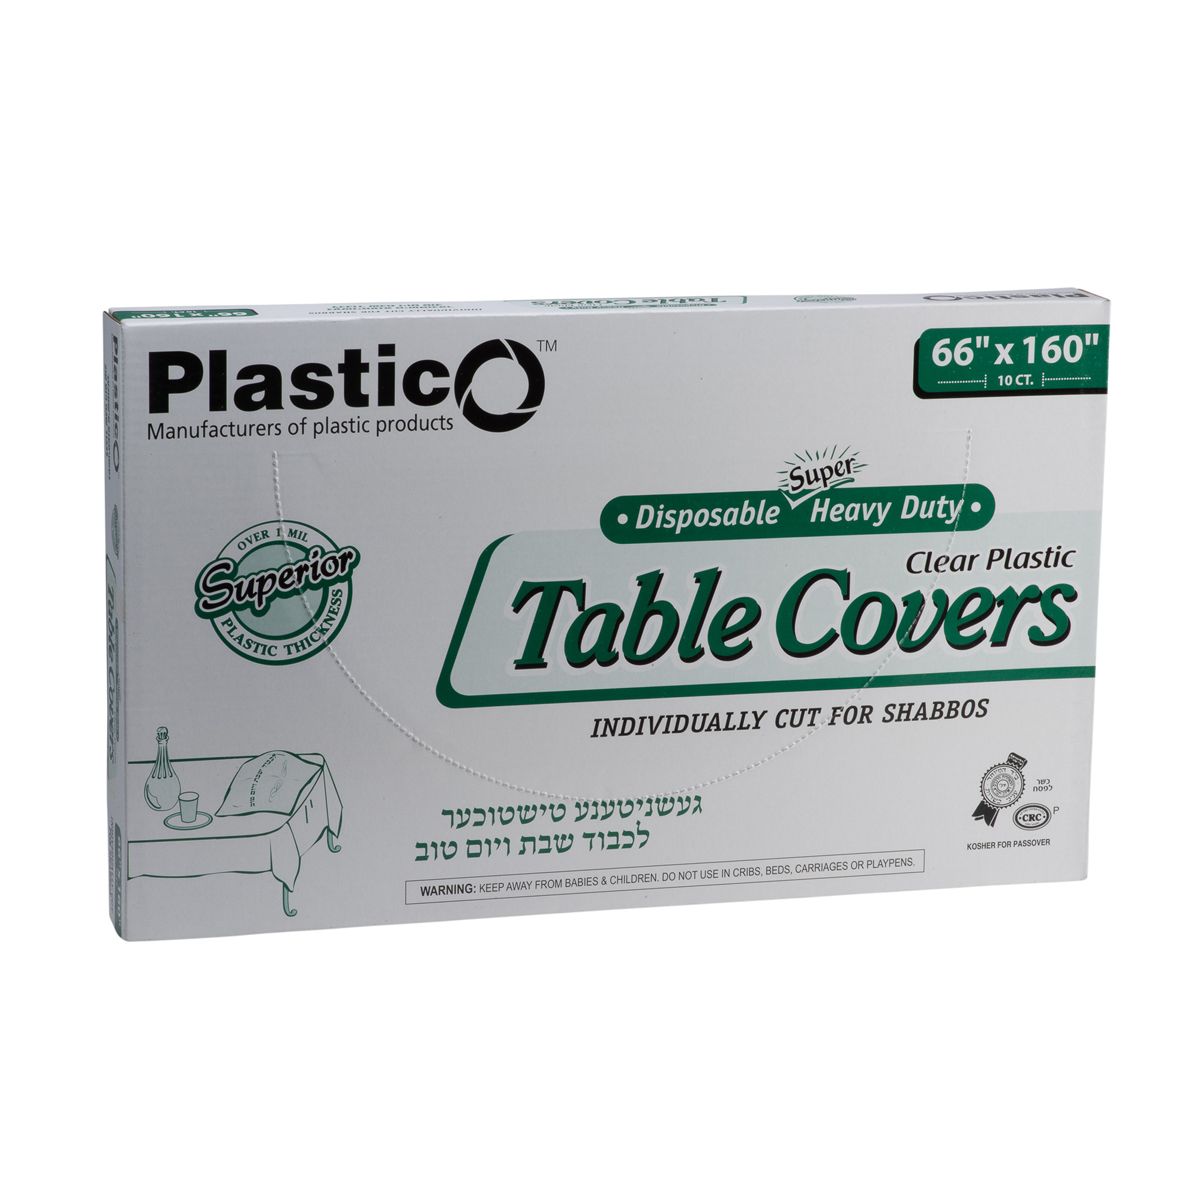 Plastico XH Clear Tablecloth 66x160 10 Count (10/cs)